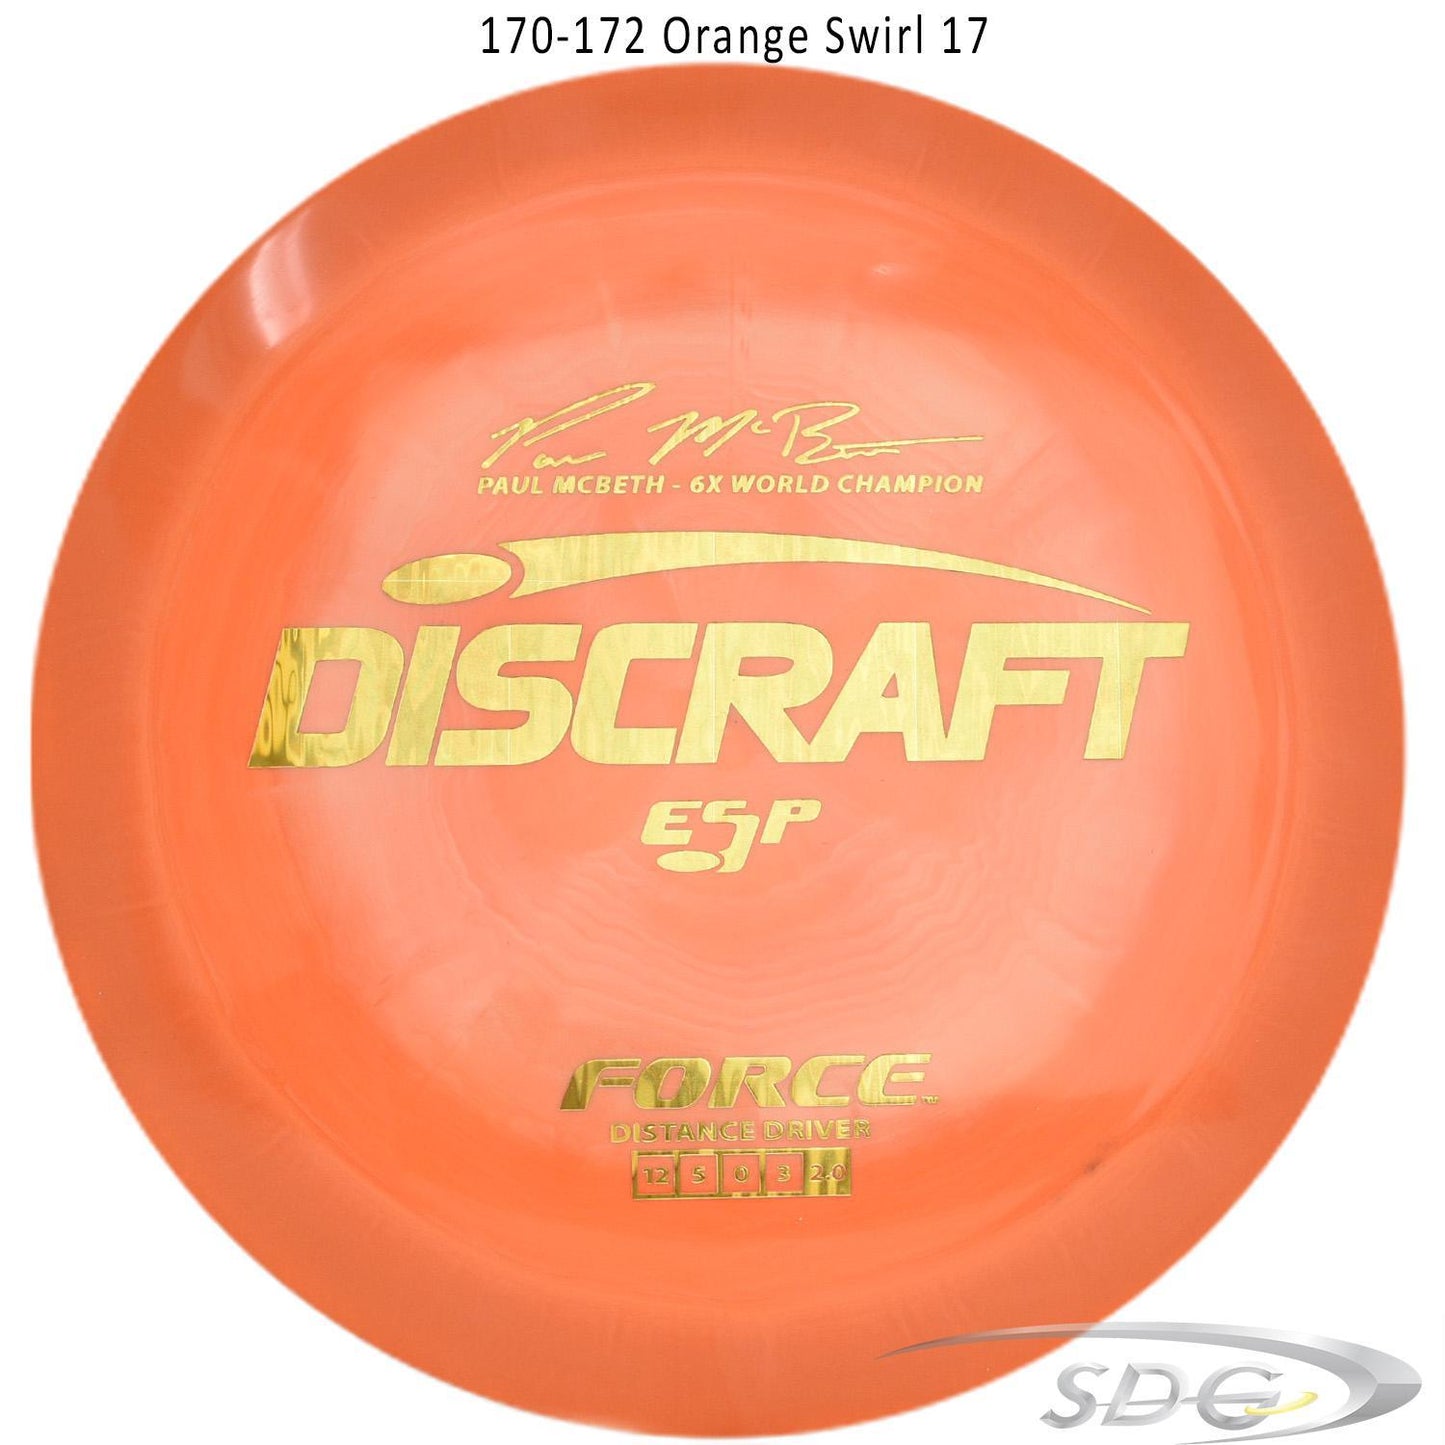 discraft-esp-force-6x-paul-mcbeth-signature-disc-golf-distance-driver 170-172 Orange Swirl 17 